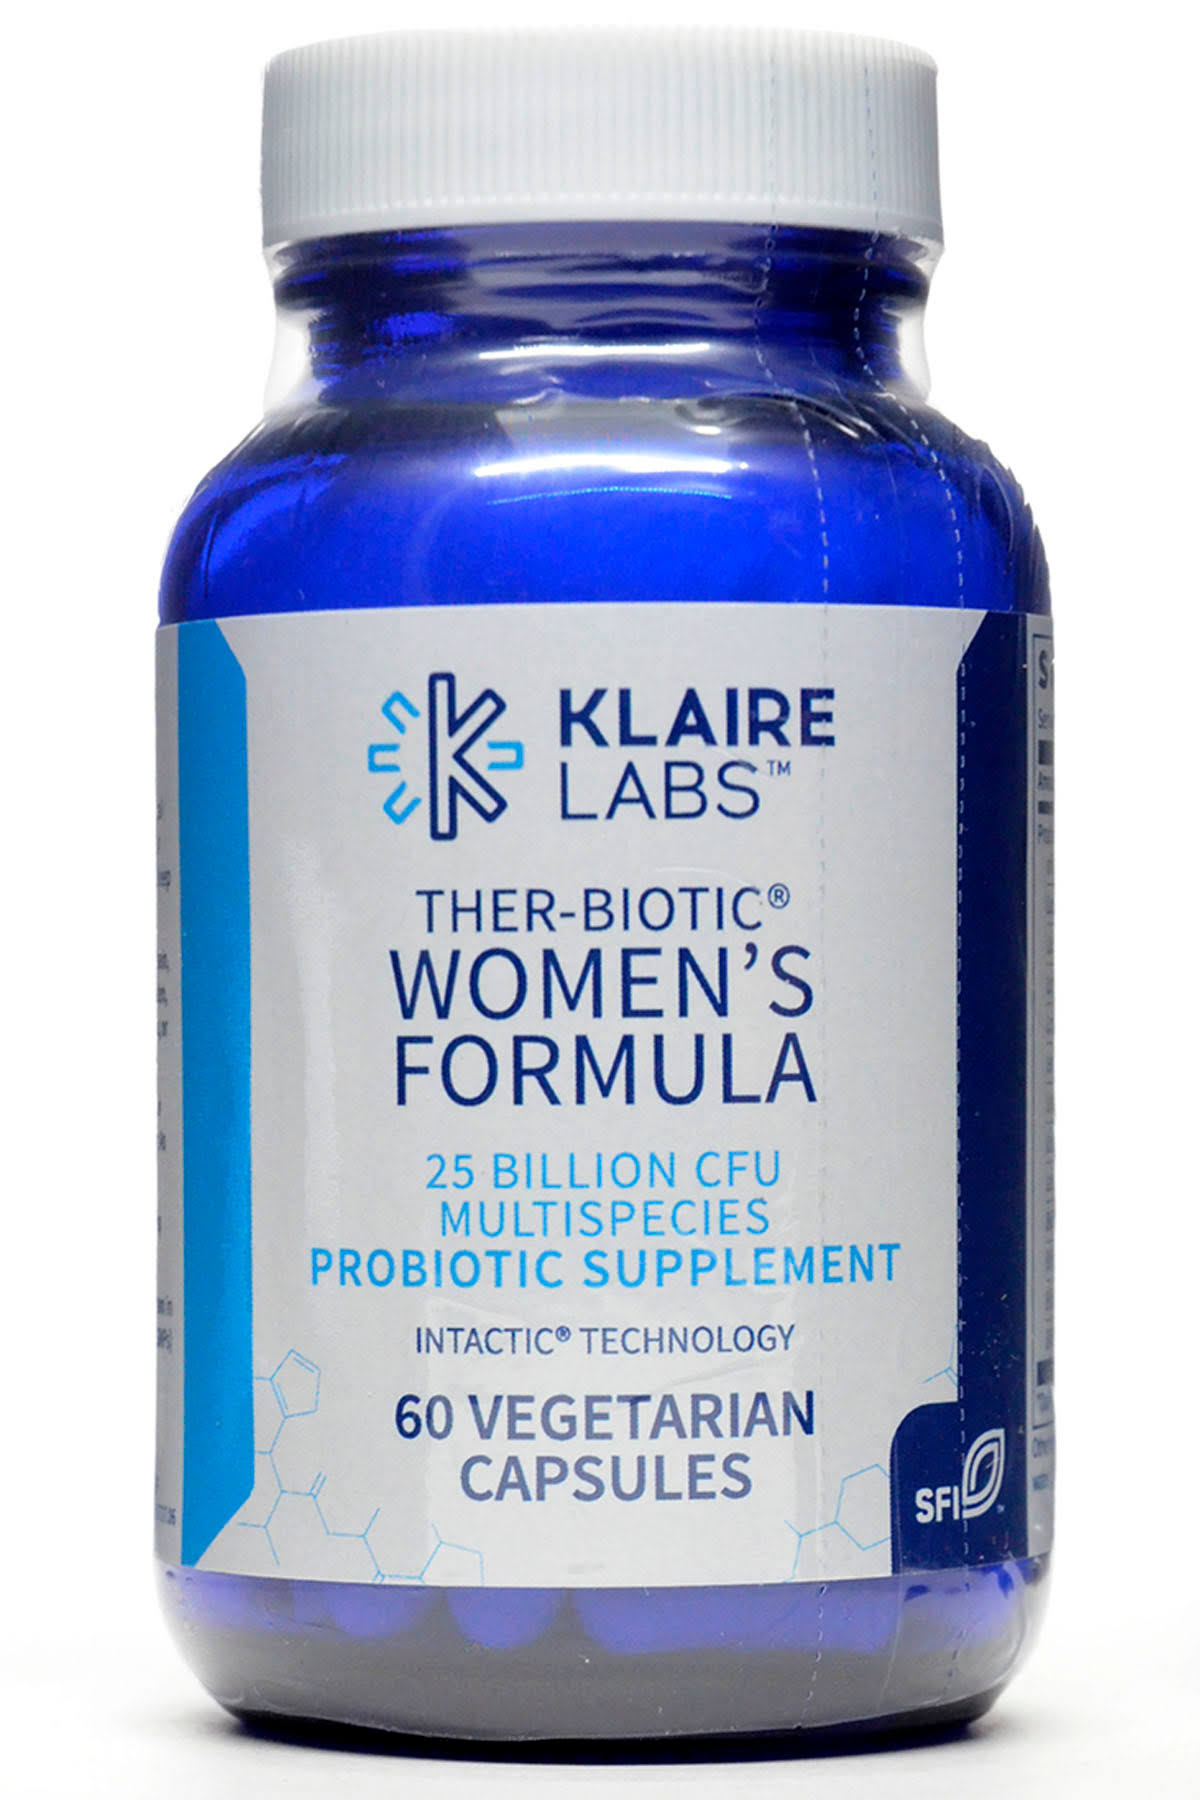 Klaire Labs Ther-Biotic Women's Formula Probiotic Supplement - 60 Capsules